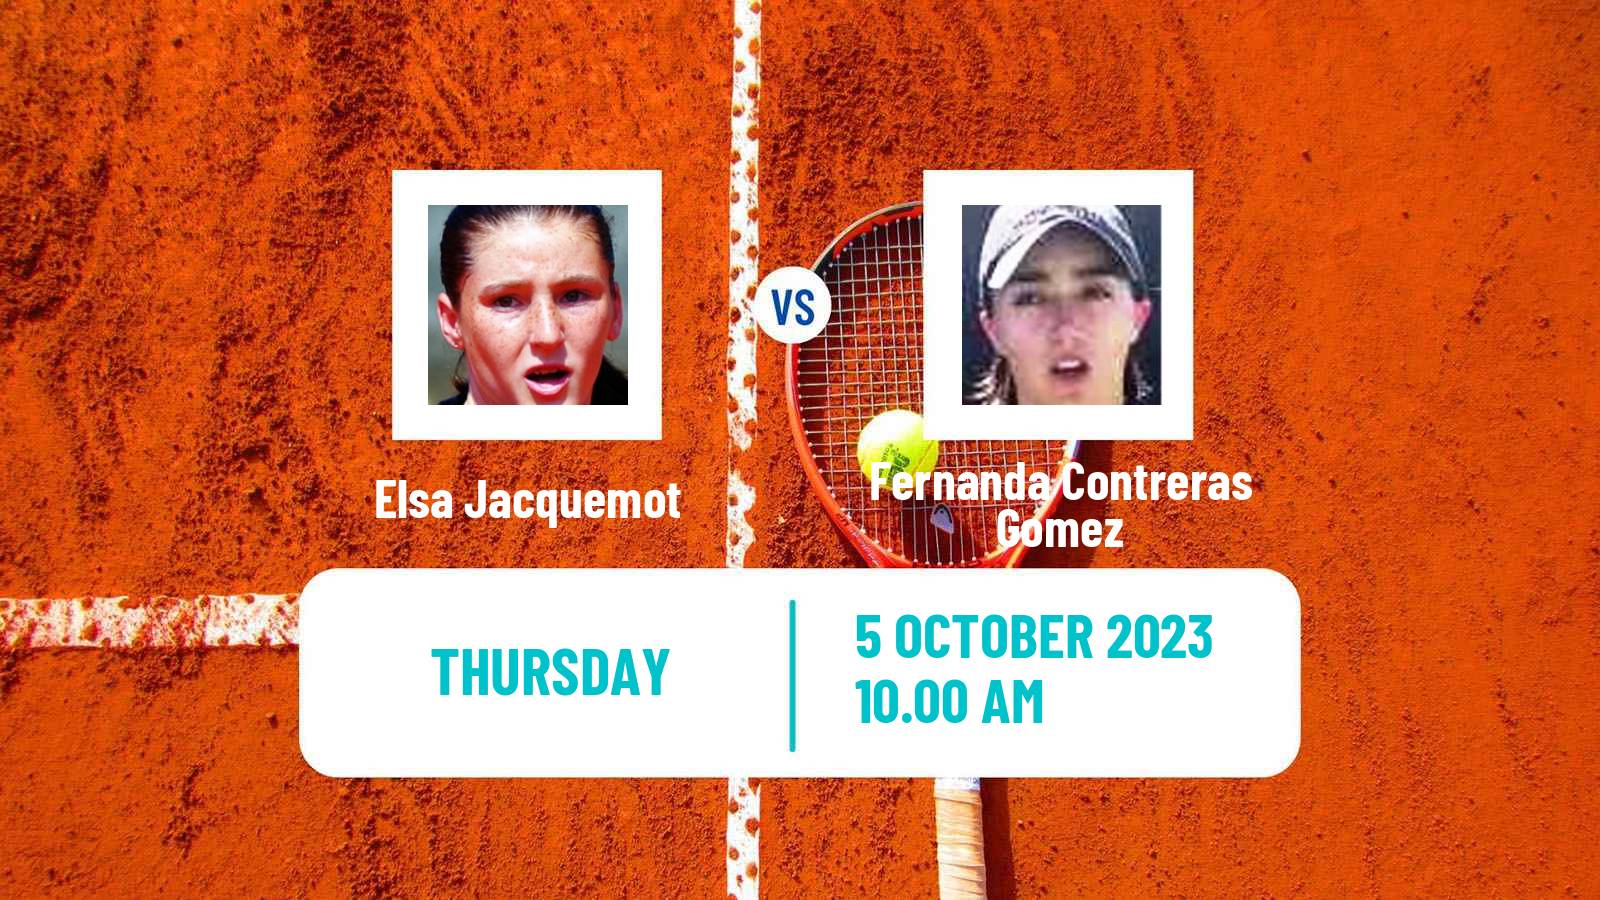 Tennis ITF W60 Rome Ga 2 Women Elsa Jacquemot - Fernanda Contreras Gomez